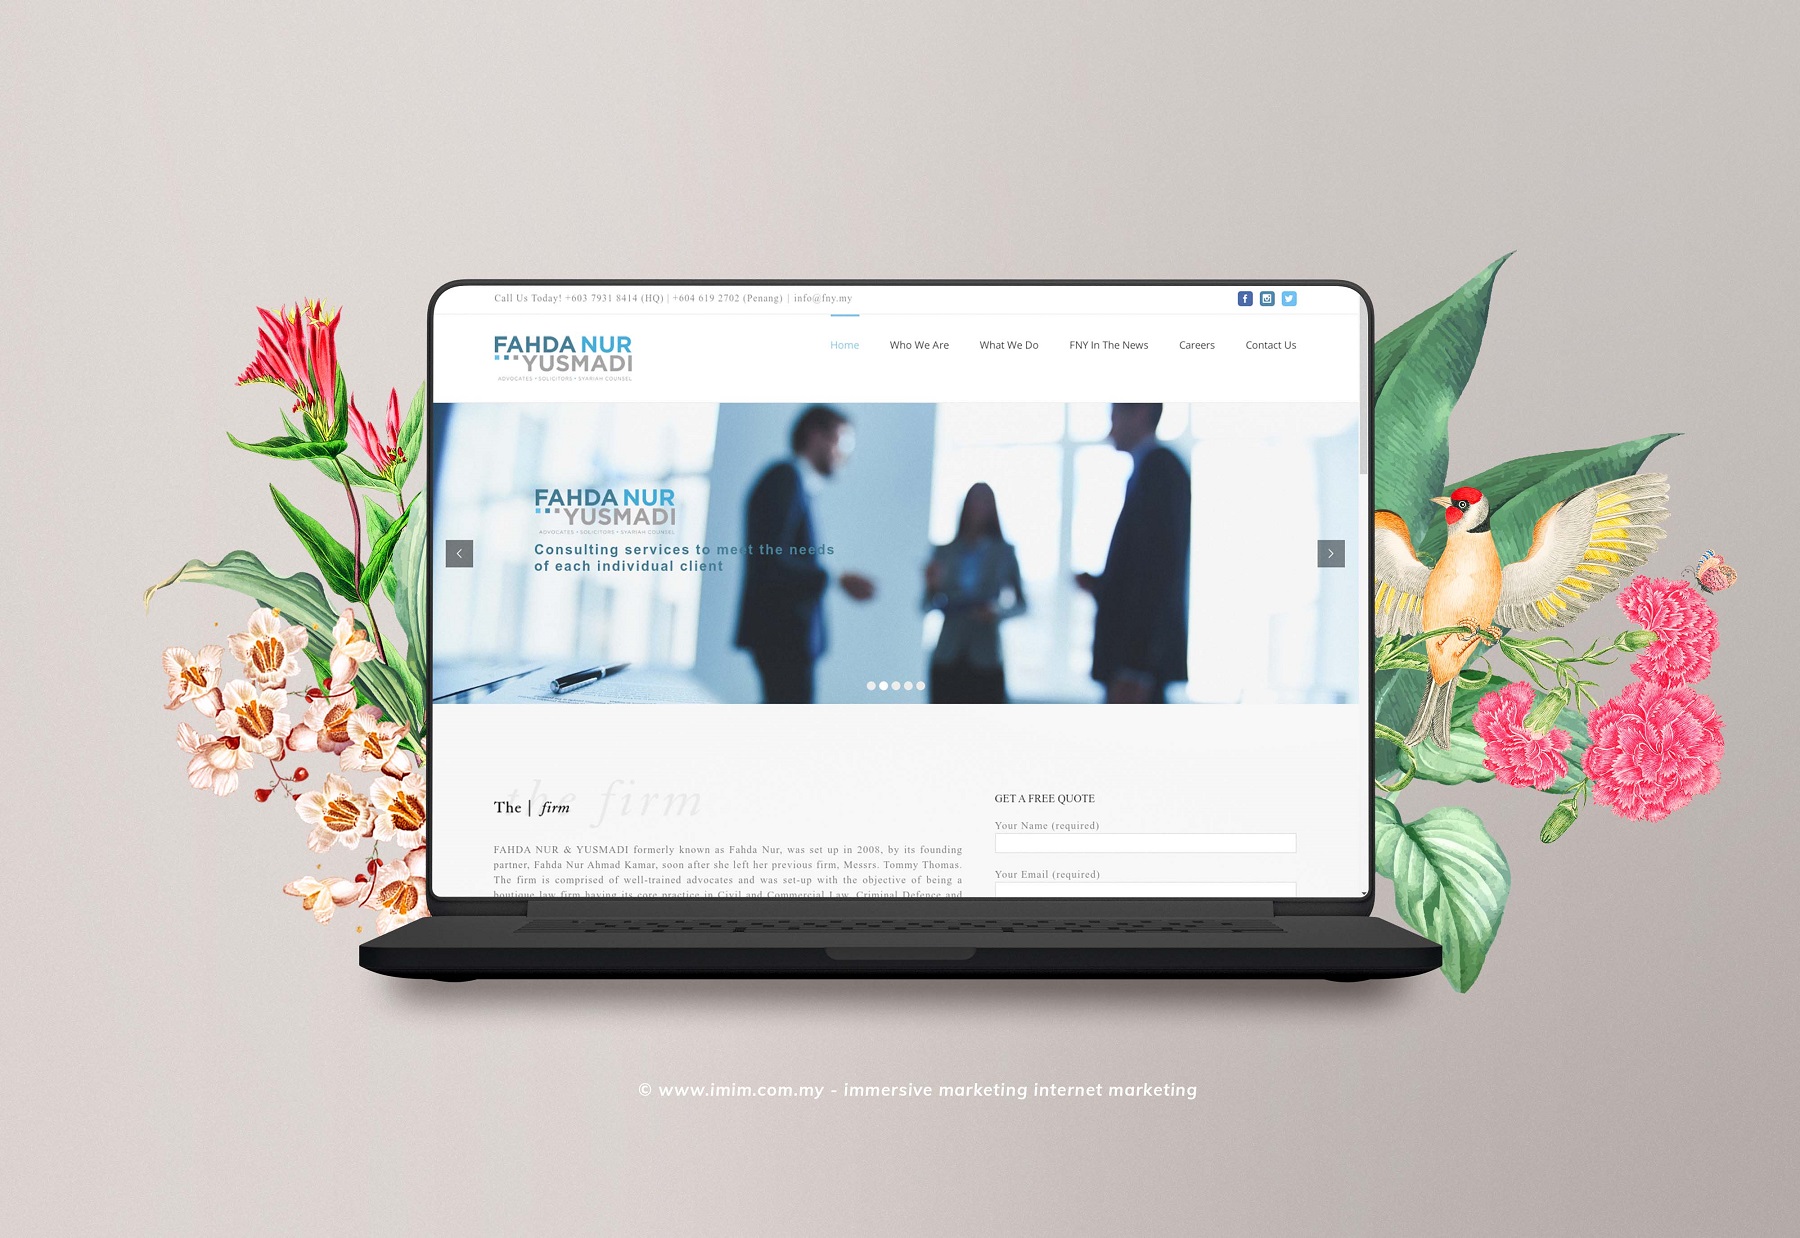 FNY Web Design Portfolio a mockup screen from website designer in Pj Malaysia by IMIM